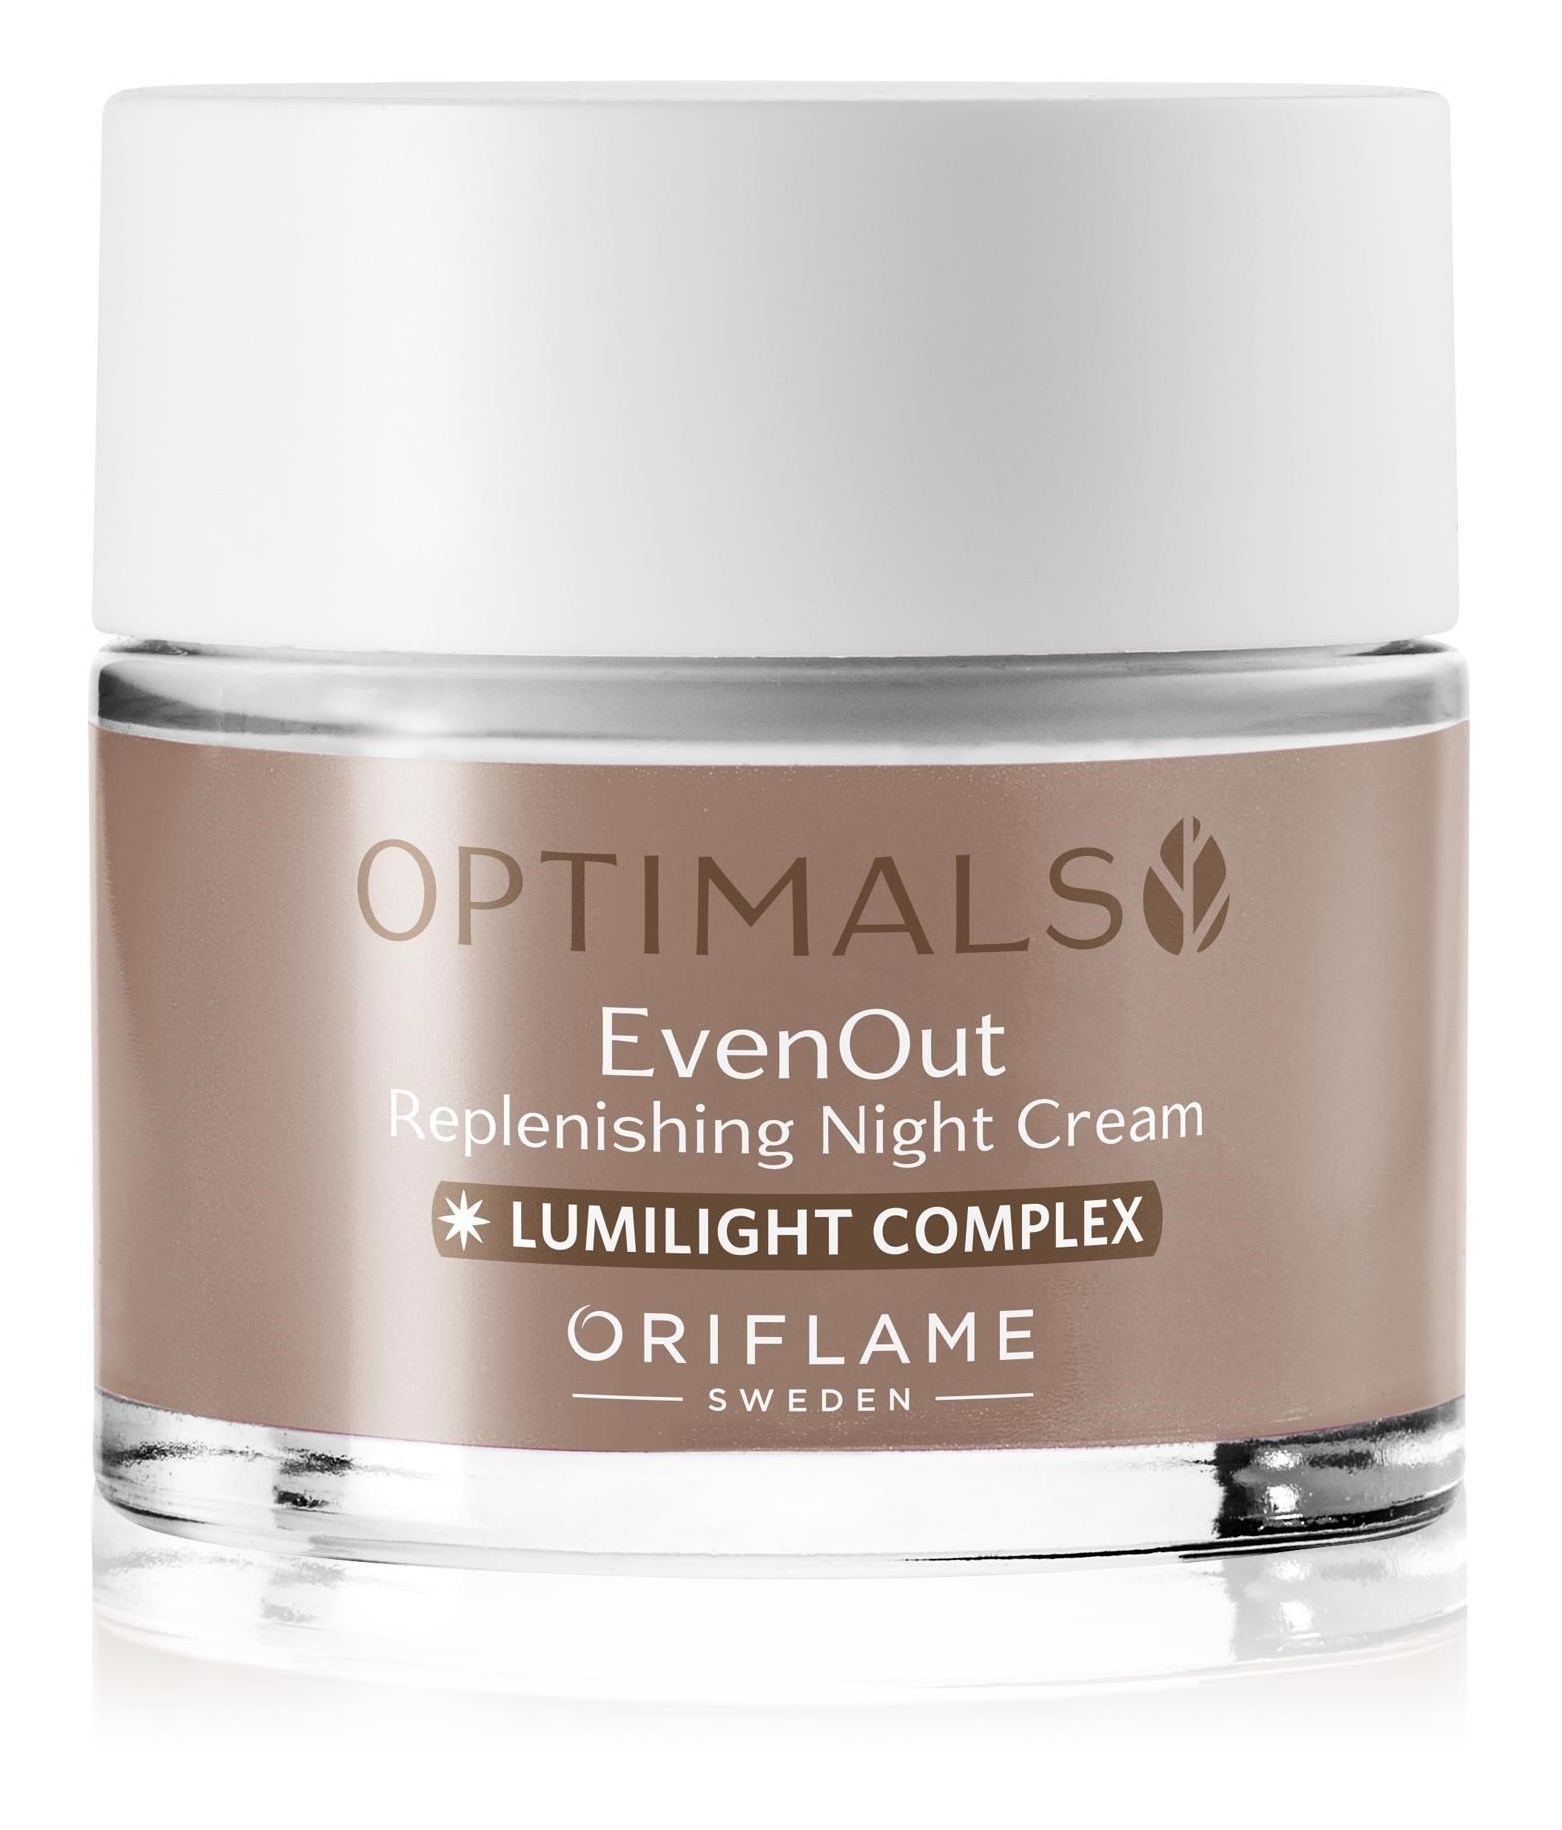 Oriflame Optimals Evenout Replenishing Night Cream